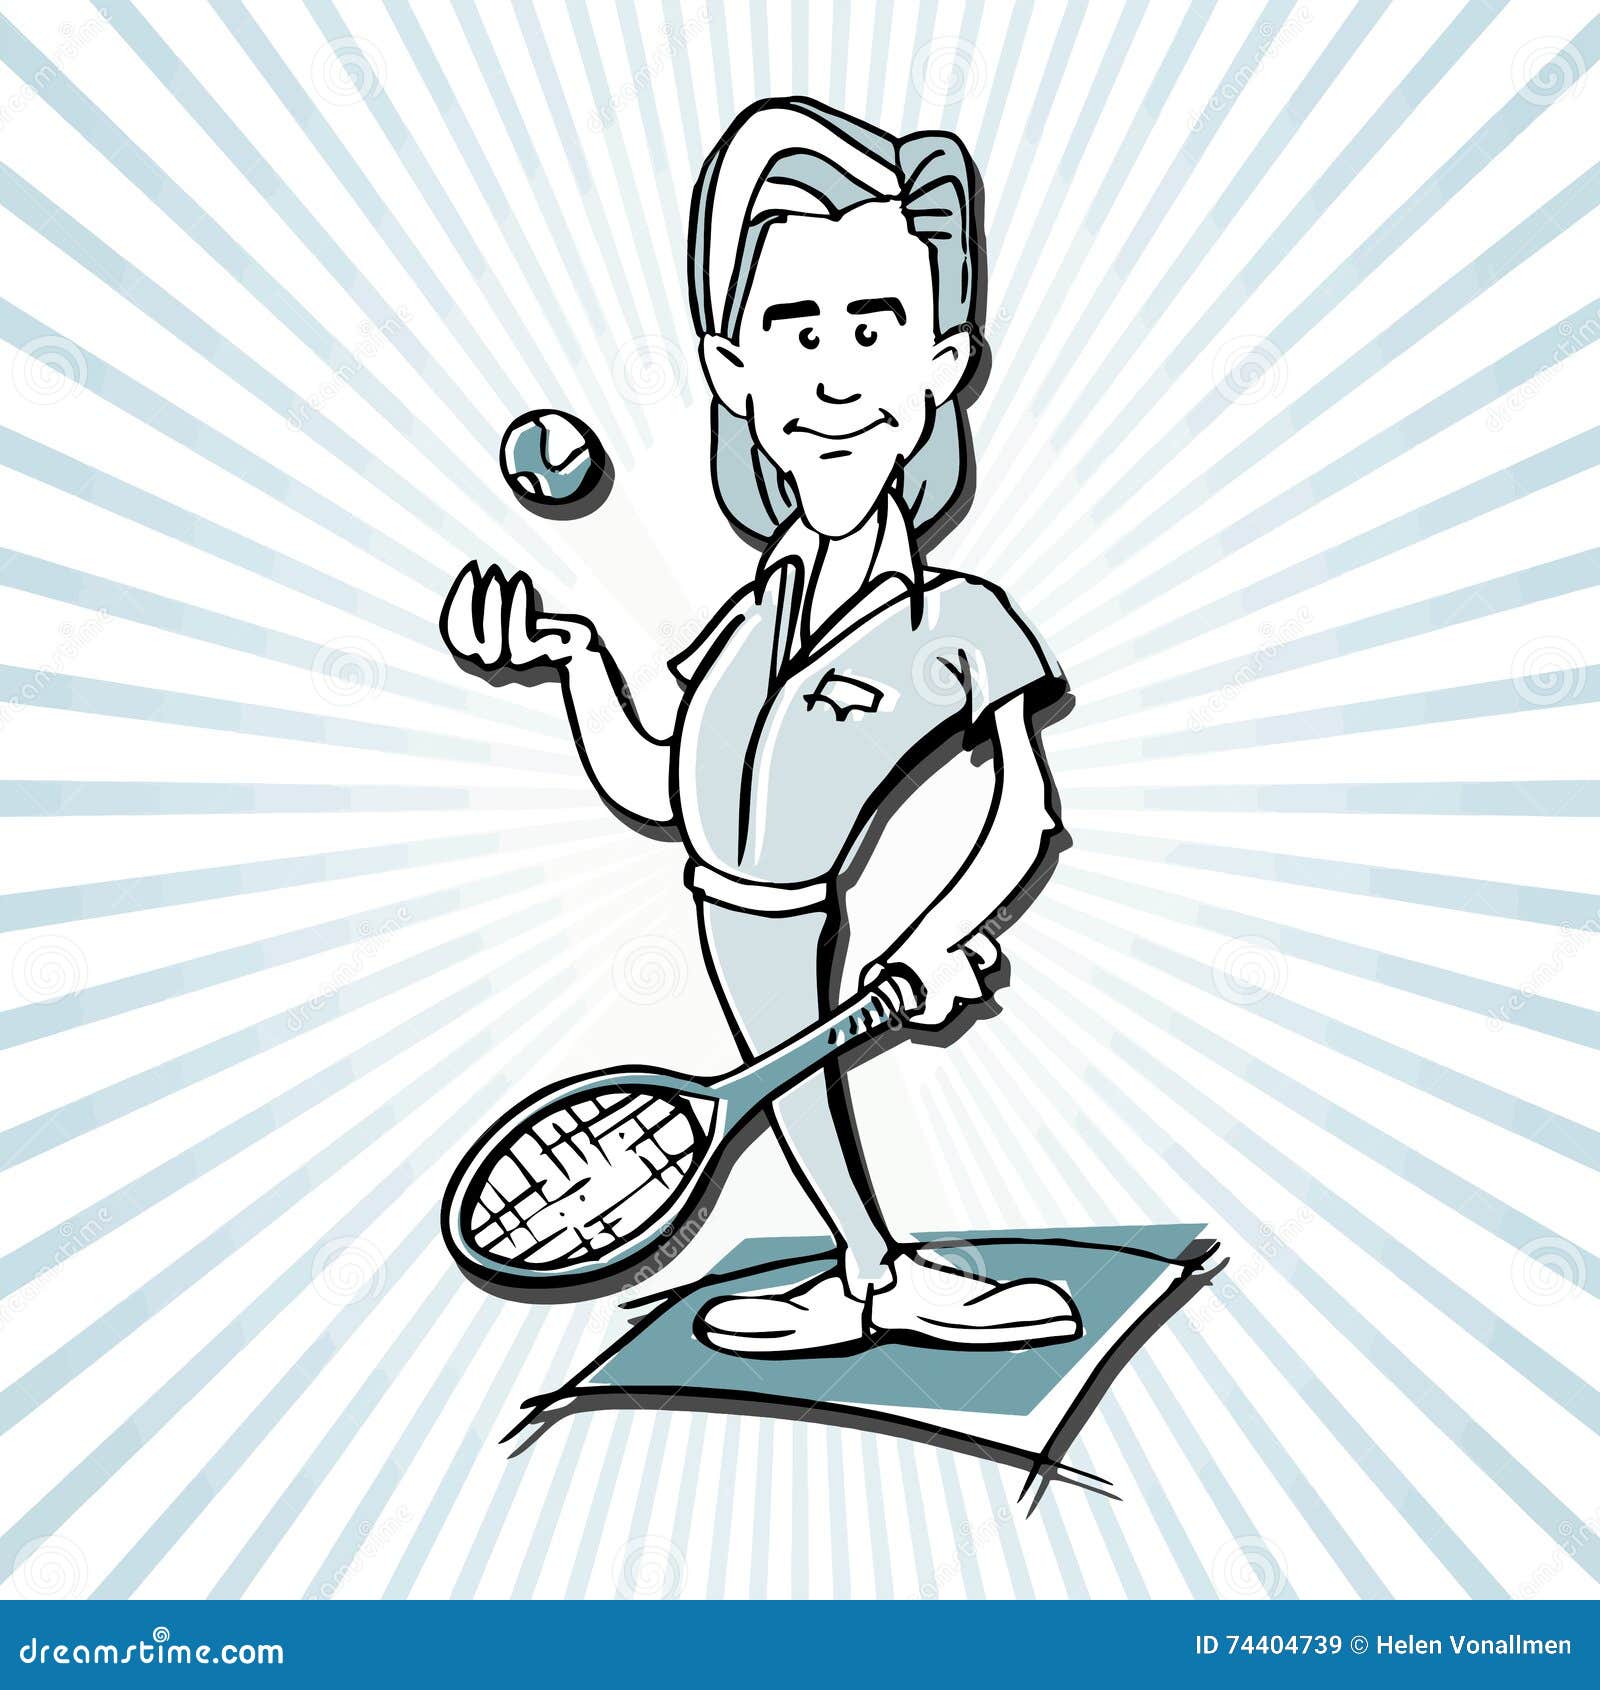 tennis player man cartoon